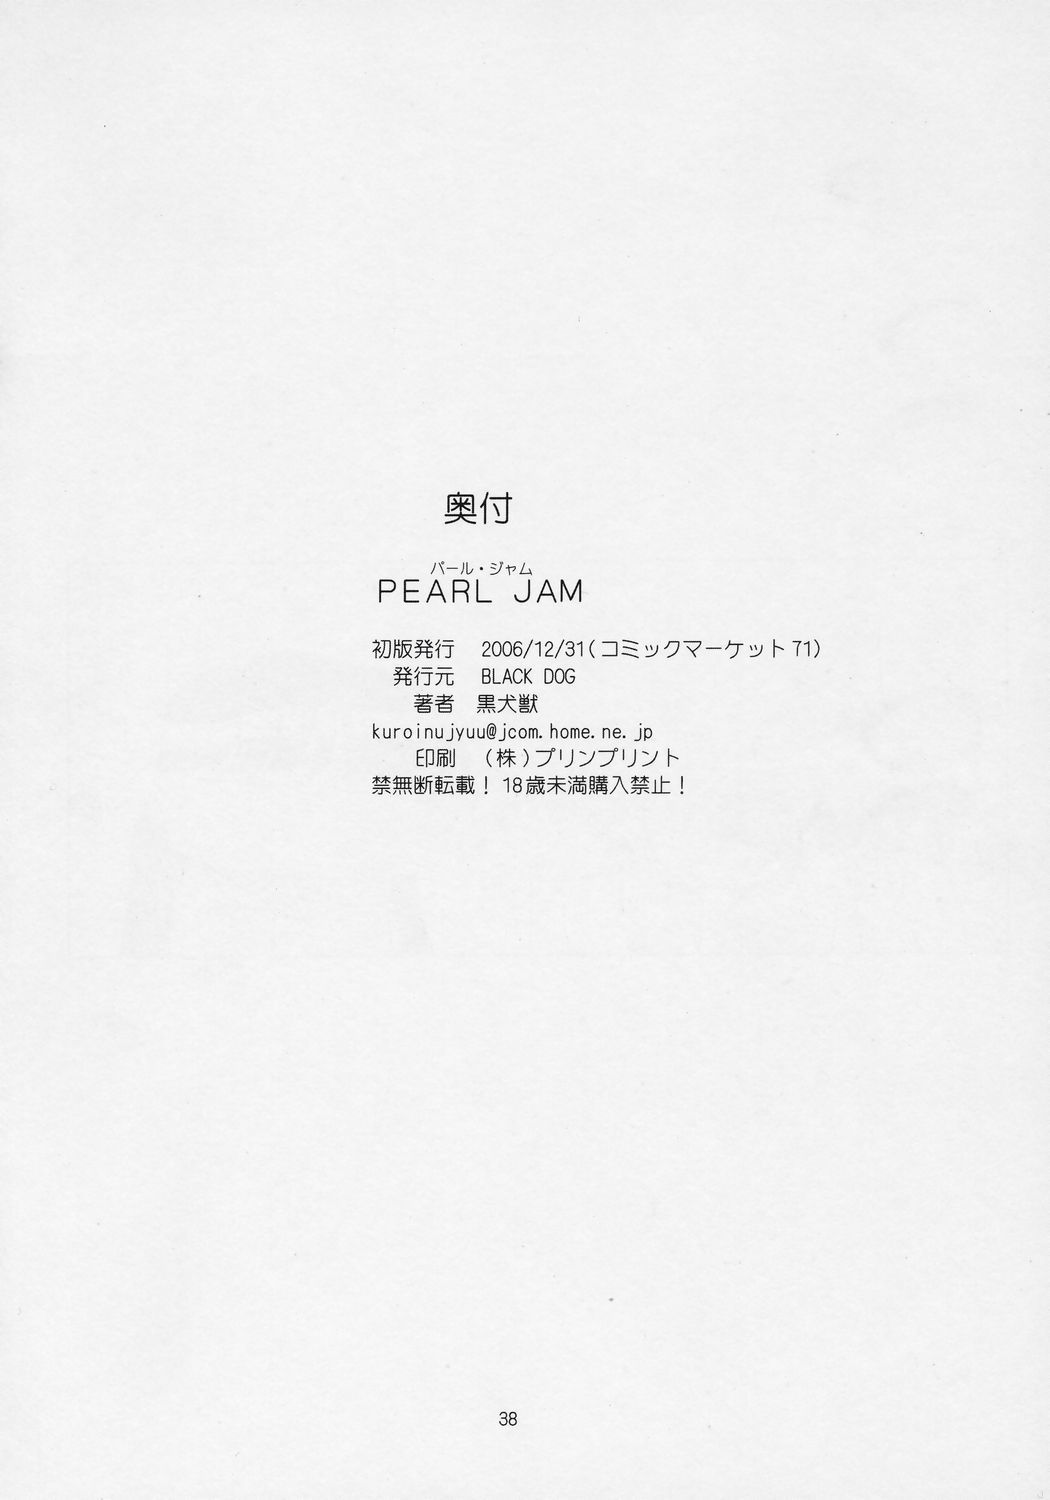 Pearl Jam Smoon 37